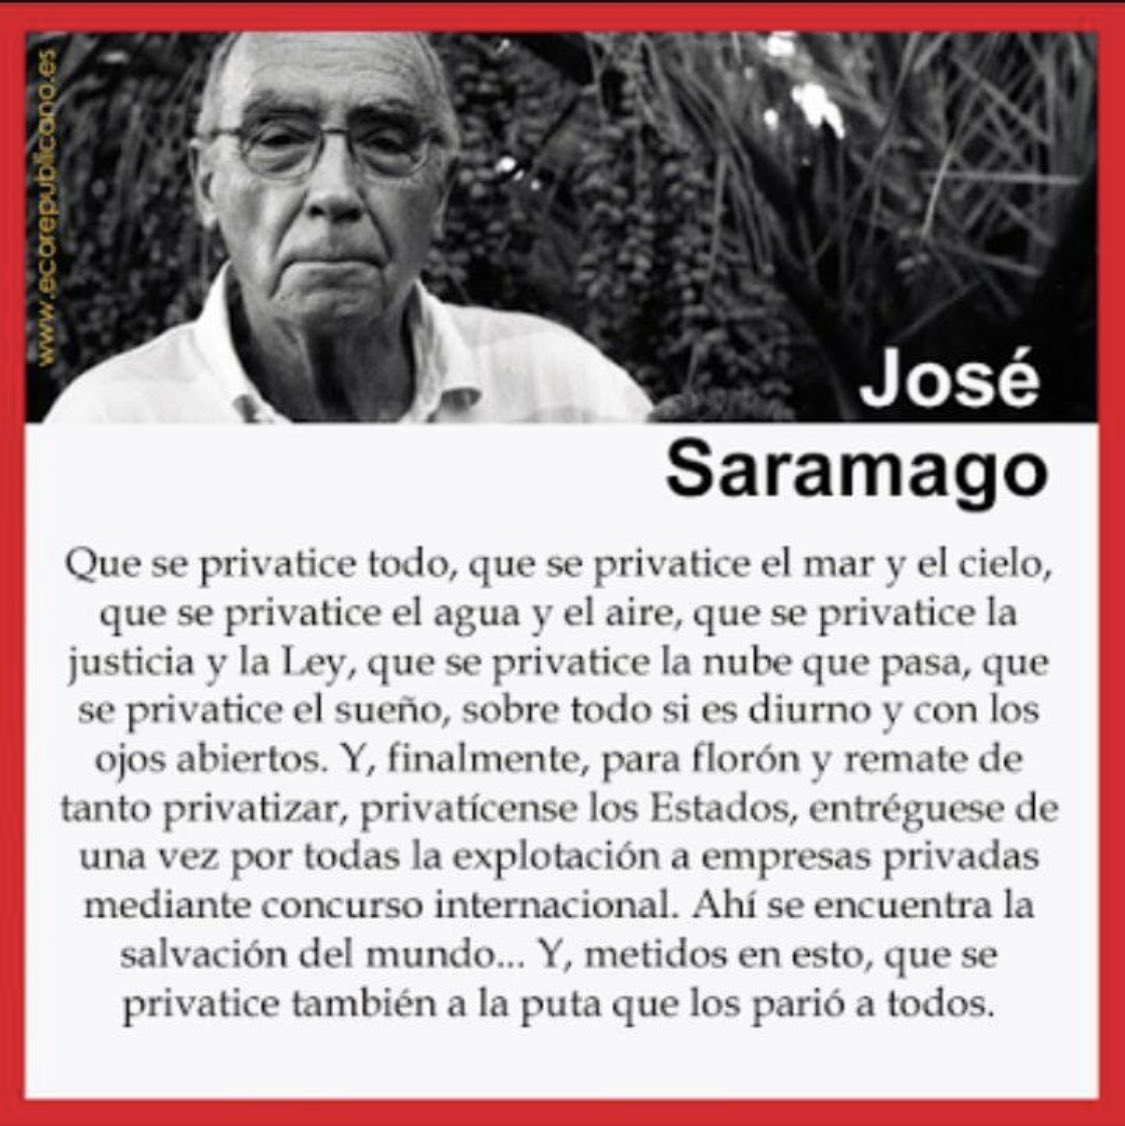 #JoseSaramago que grande fuiste vos.
Vigente: